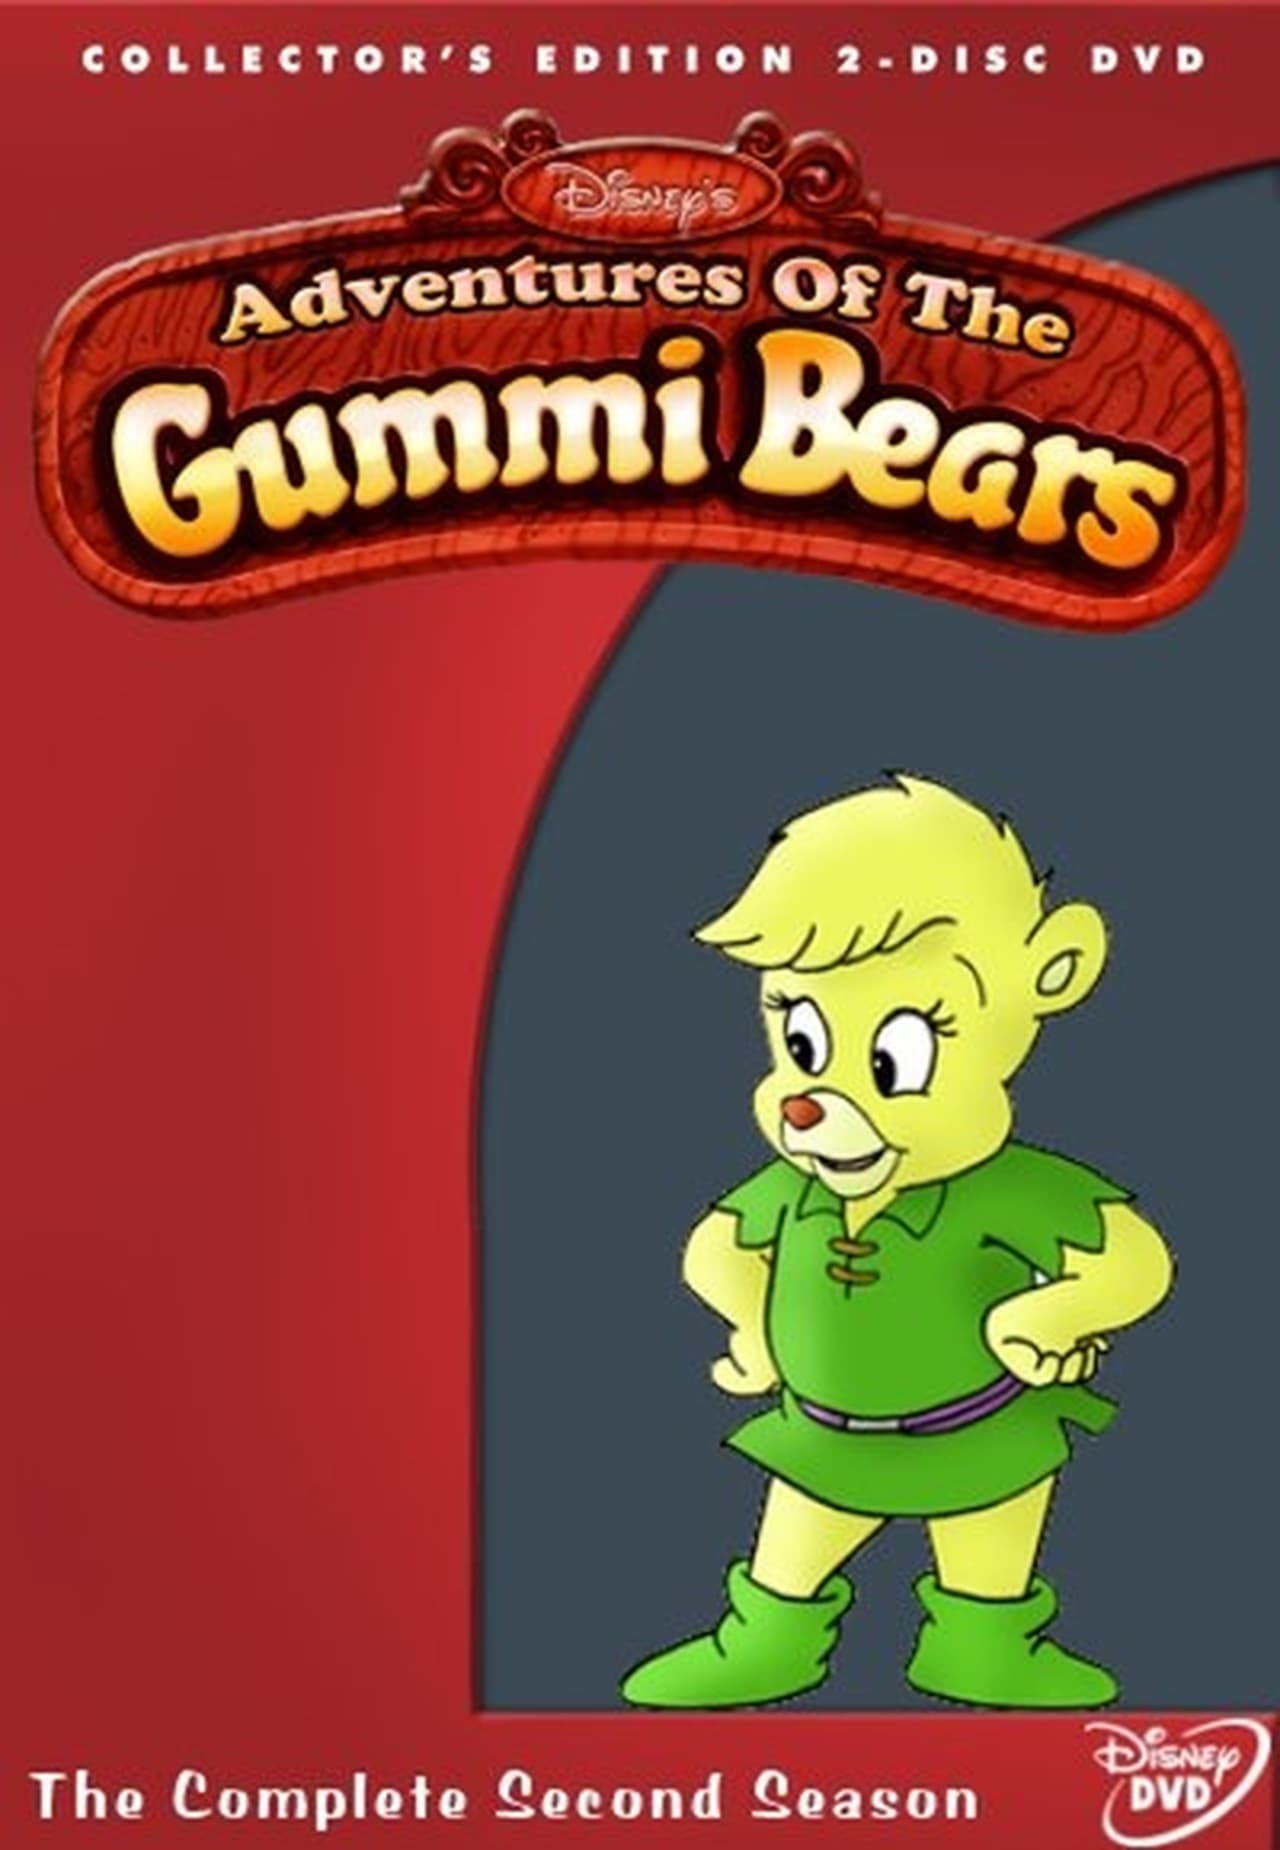 Disney's Adventures Of The Gummi Bears Season 2